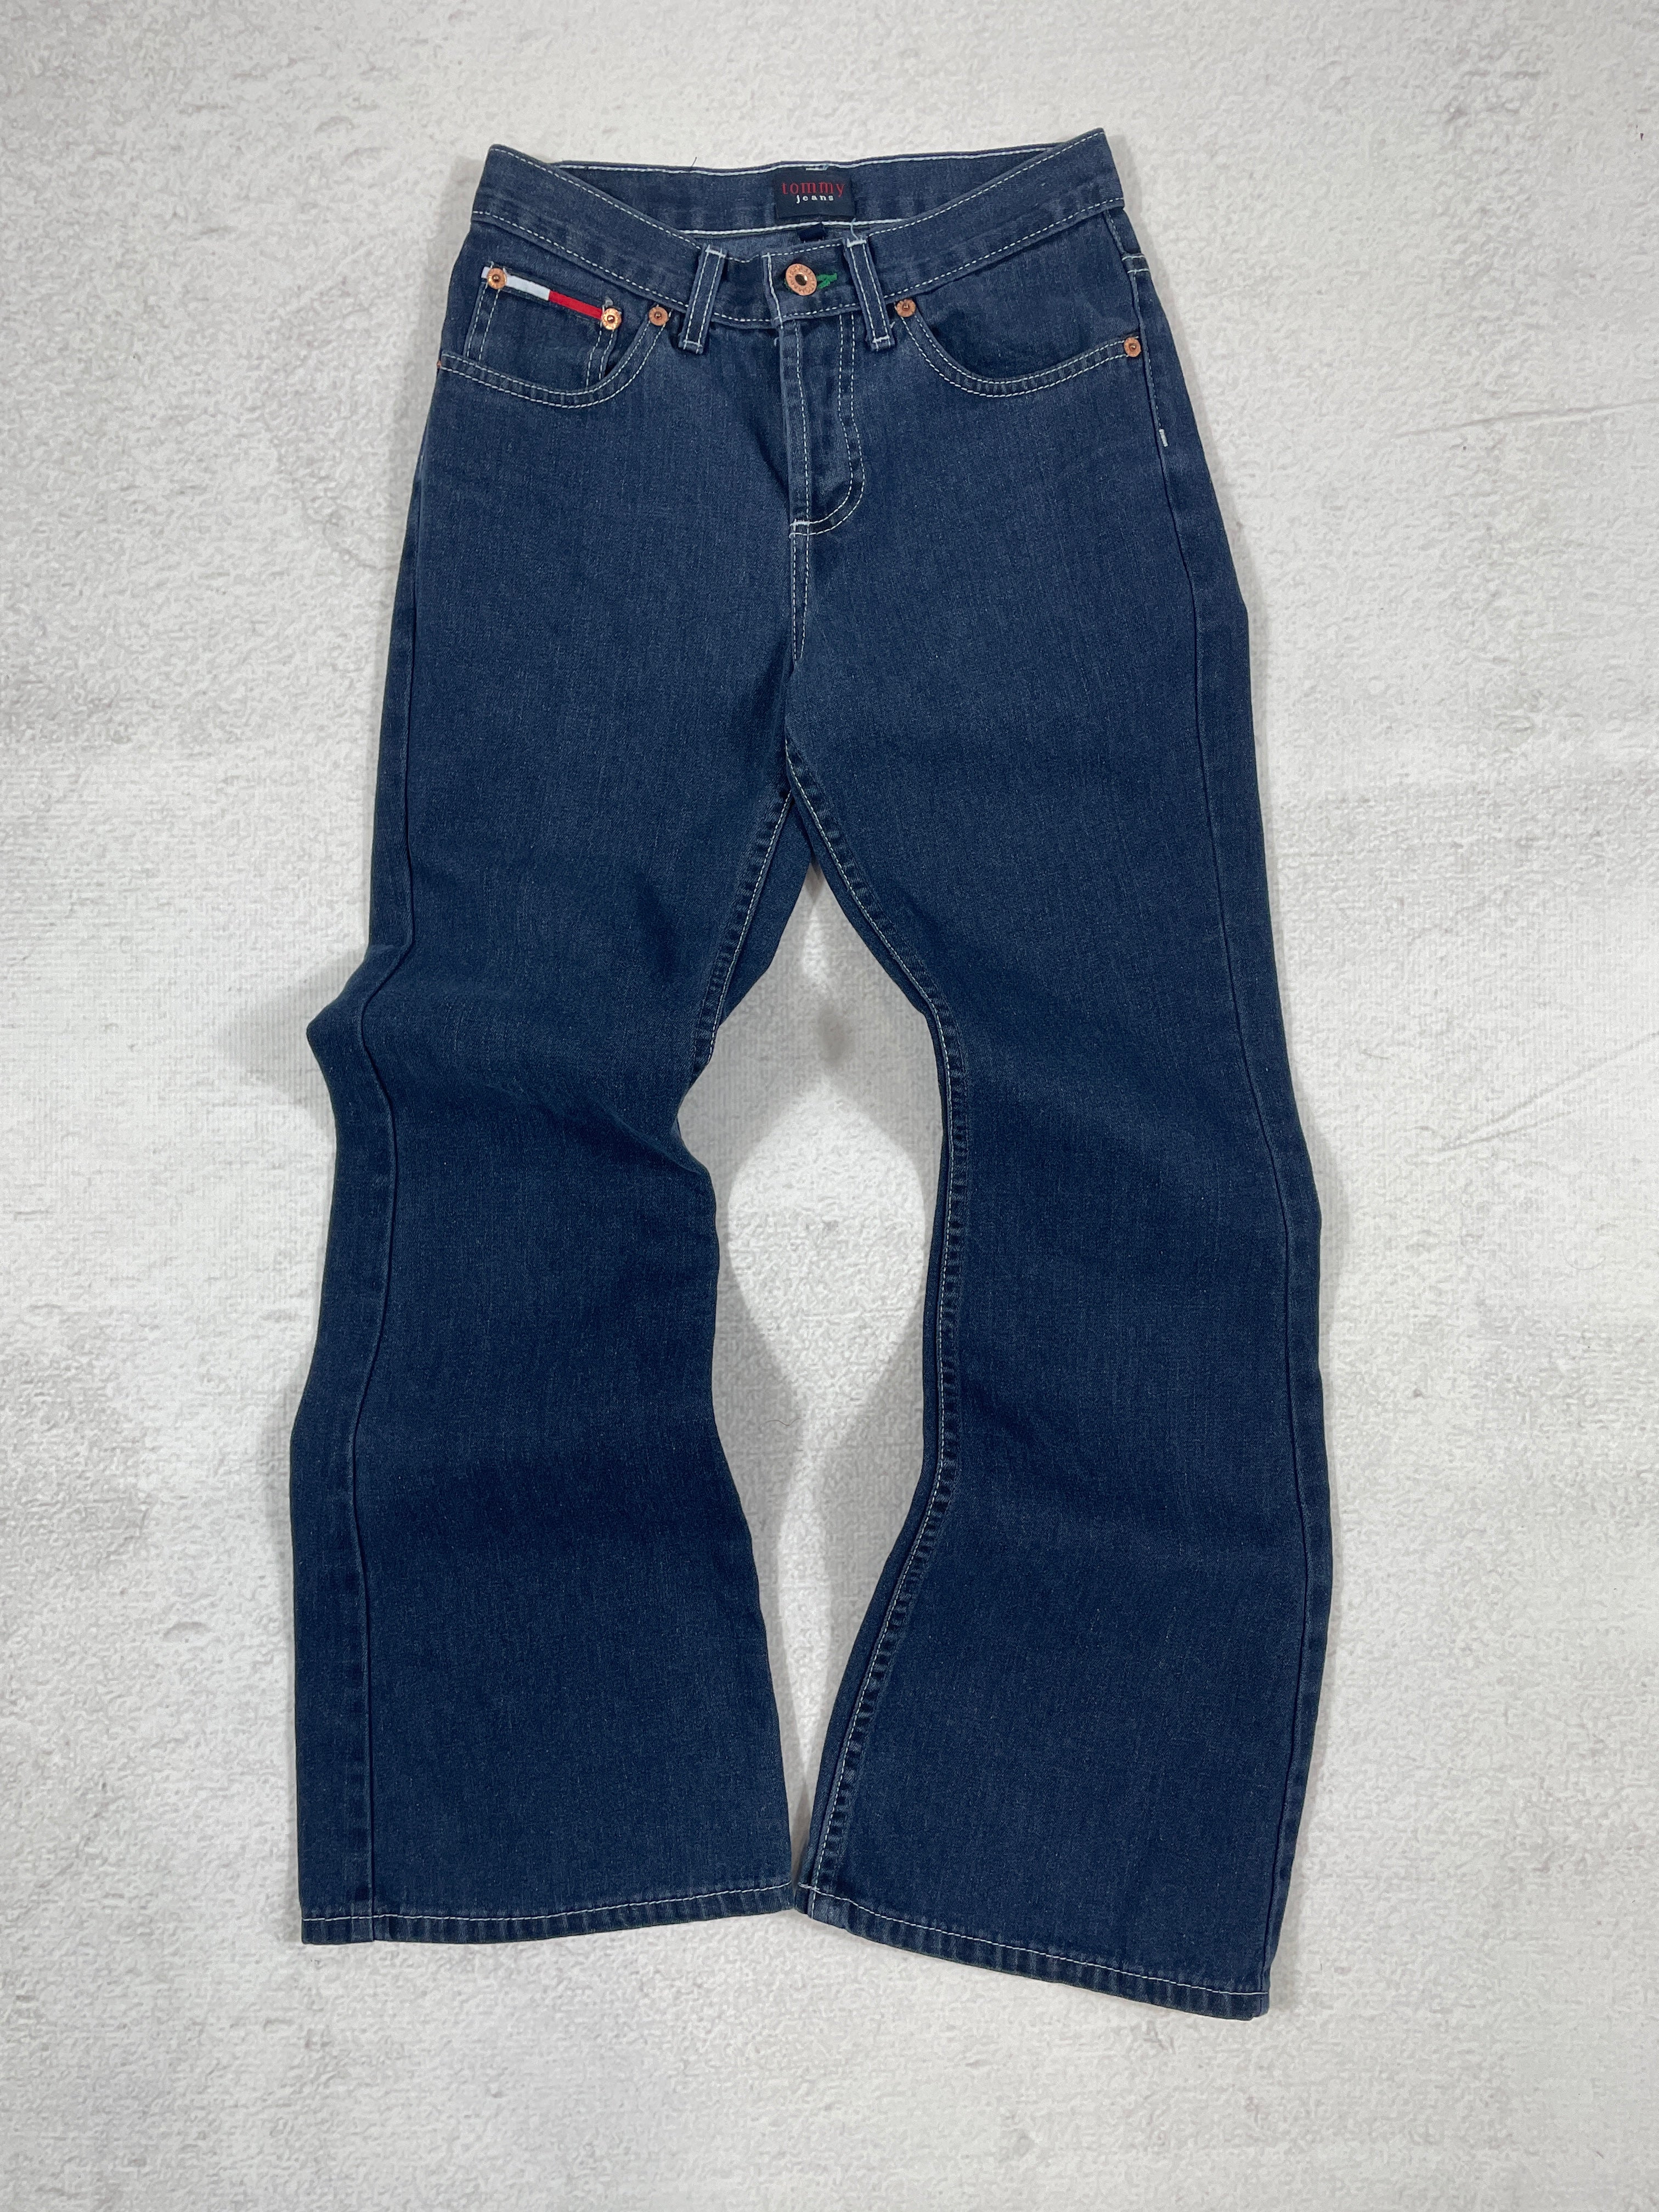 Vintage Tommy Hilfiger Flare Jeans - Women's 14